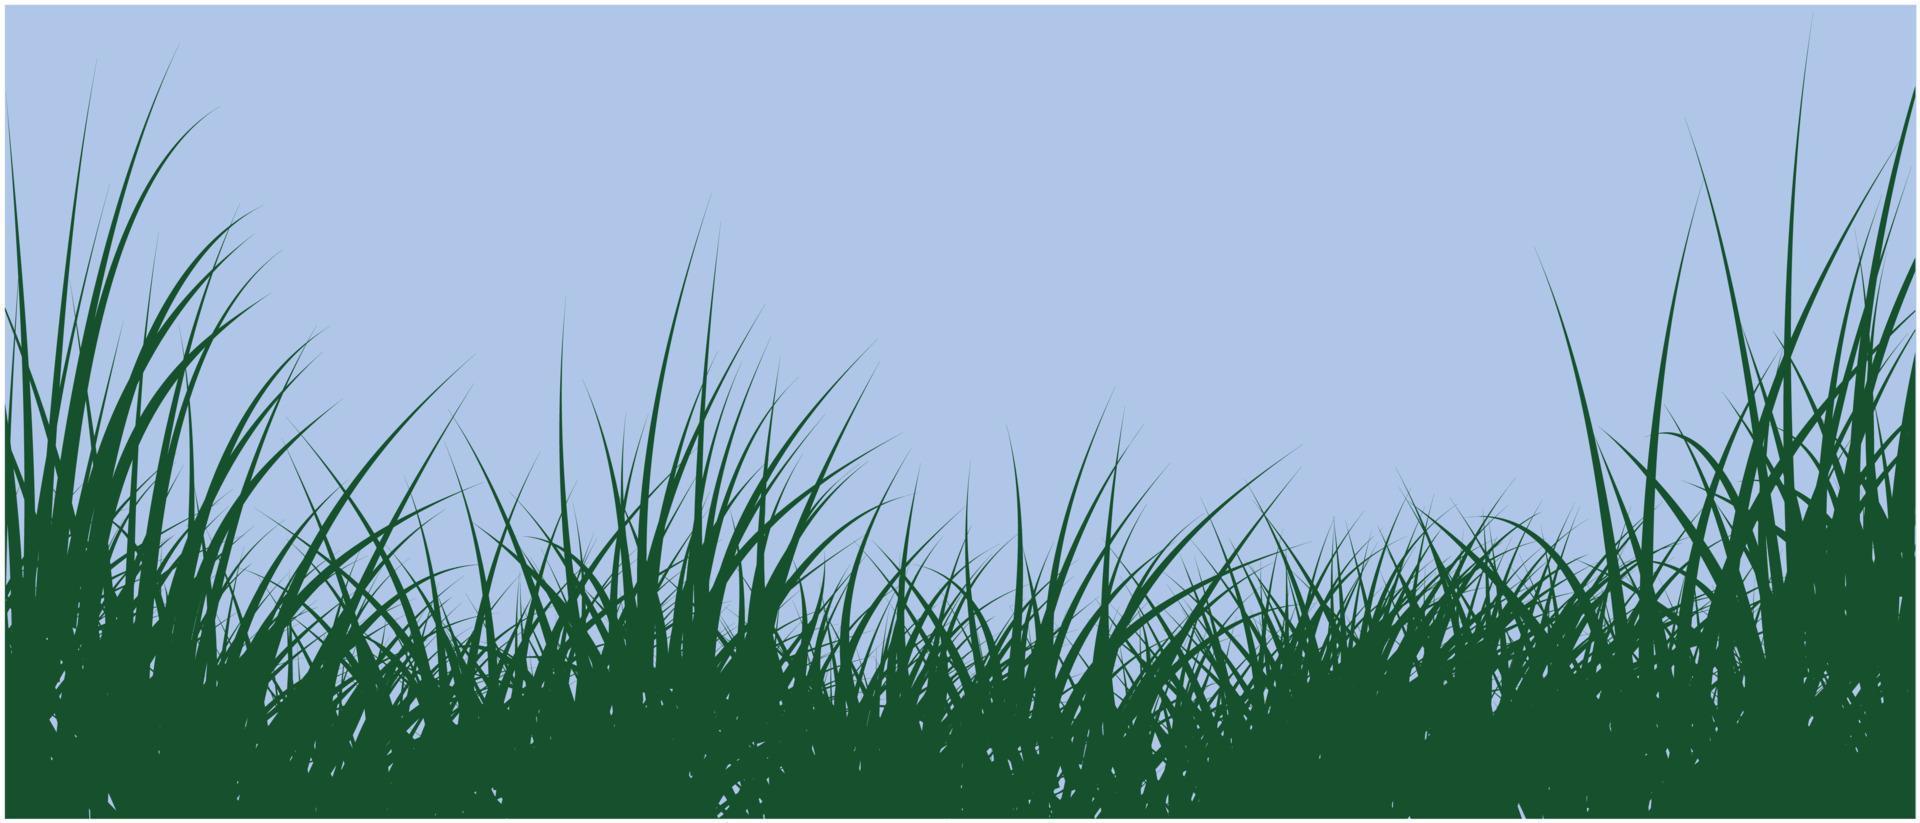 grass silhouette banner vector